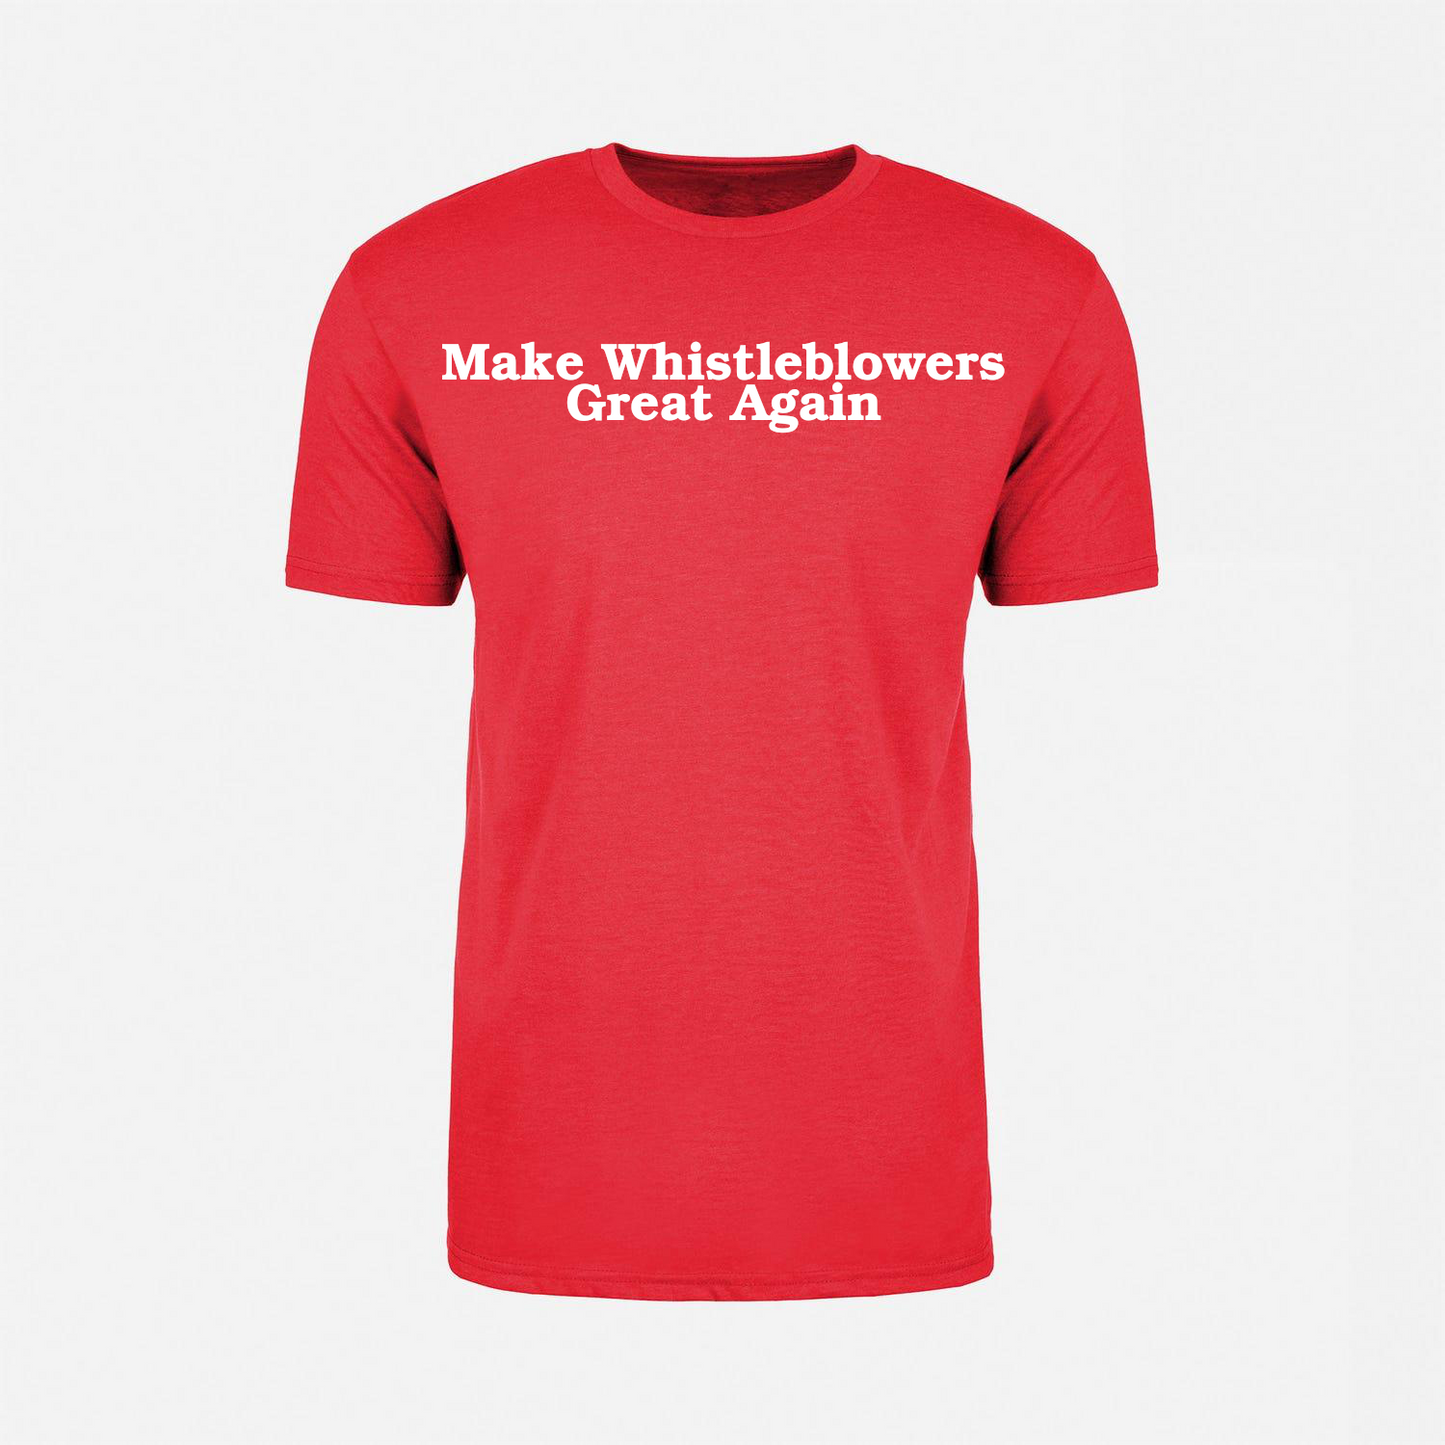 Make Whistleblowers Great Again - MWGA